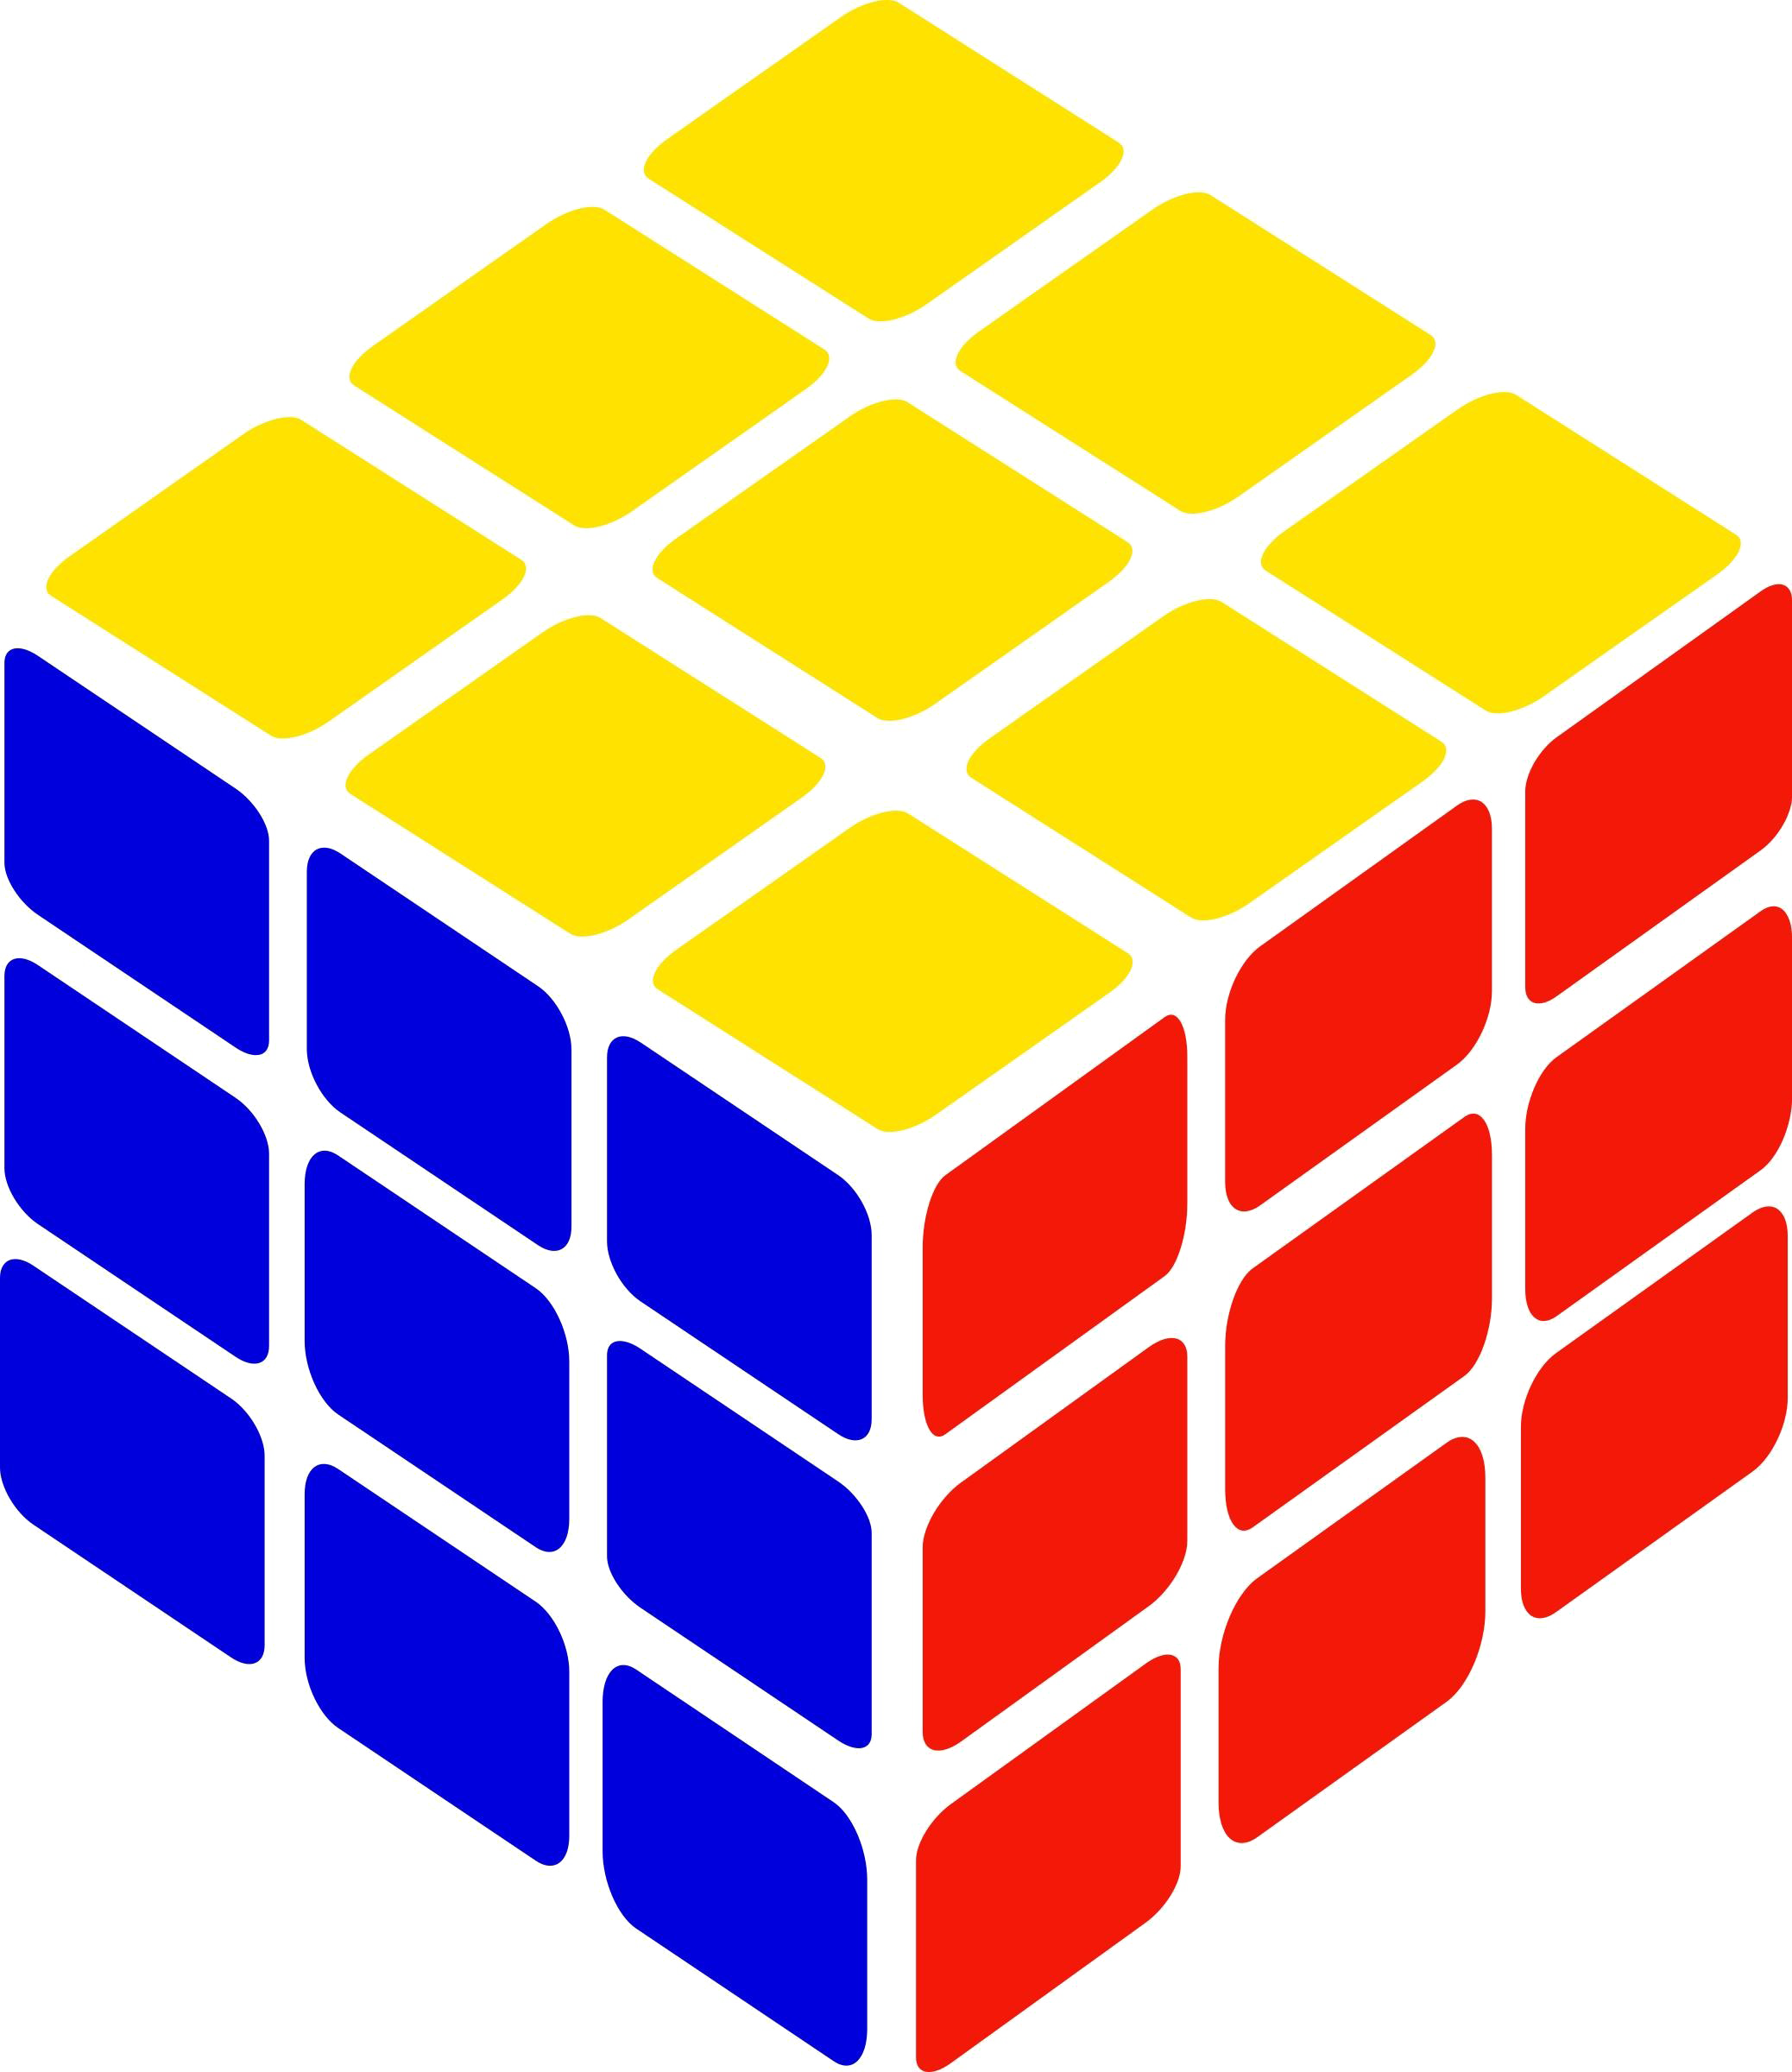 Rubik'S Cube Image PNG File HD PNG Image